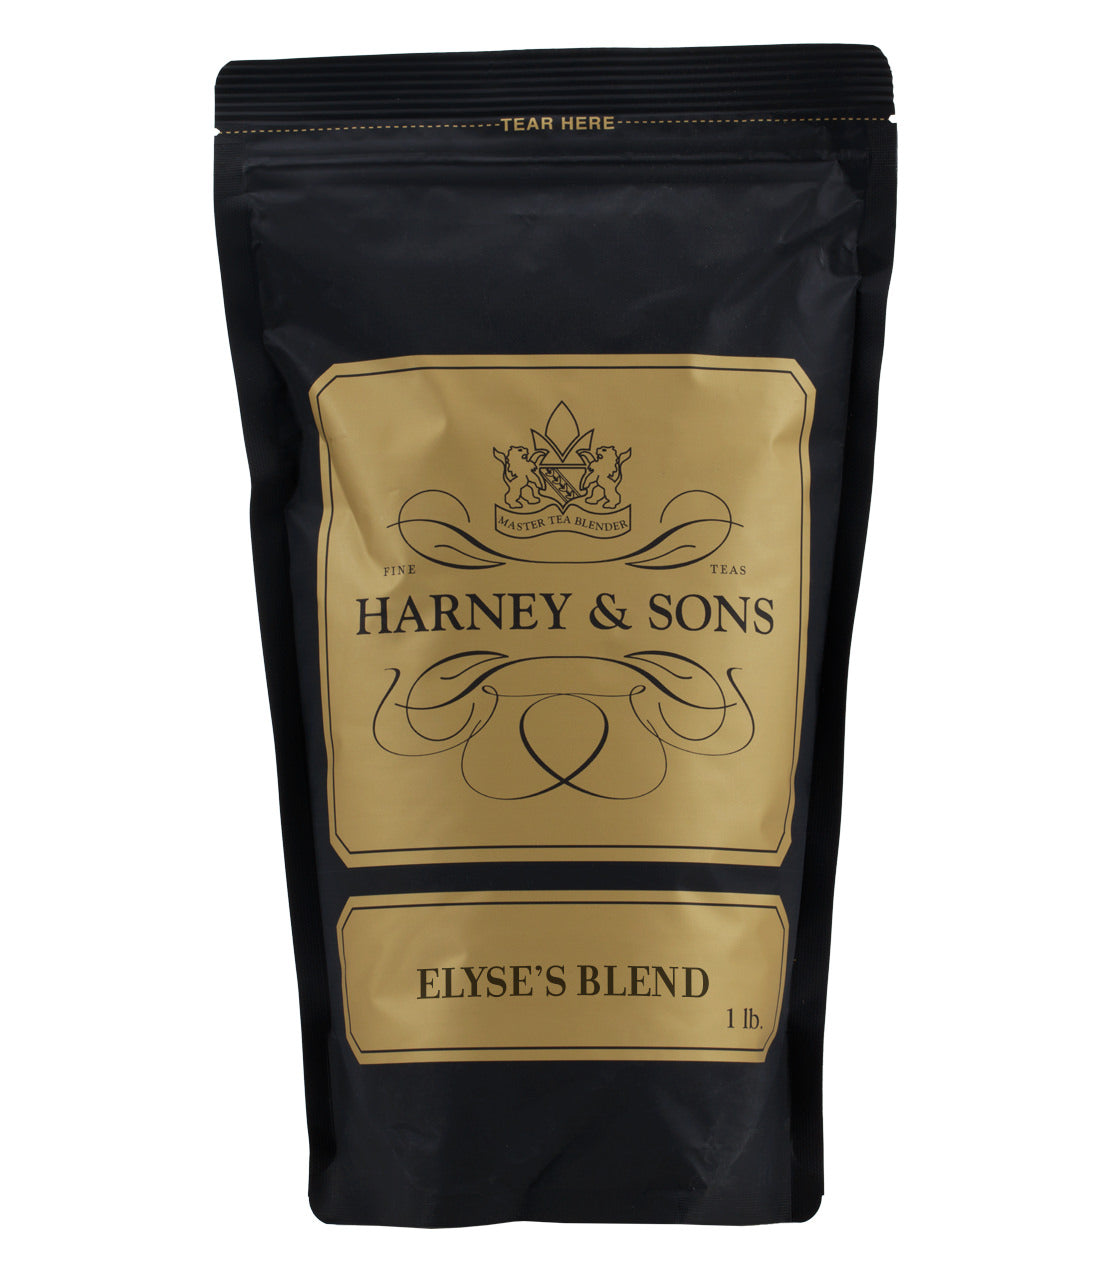 Elyse's Blend - Loose 1 lb. Bag - Harney & Sons Fine Teas